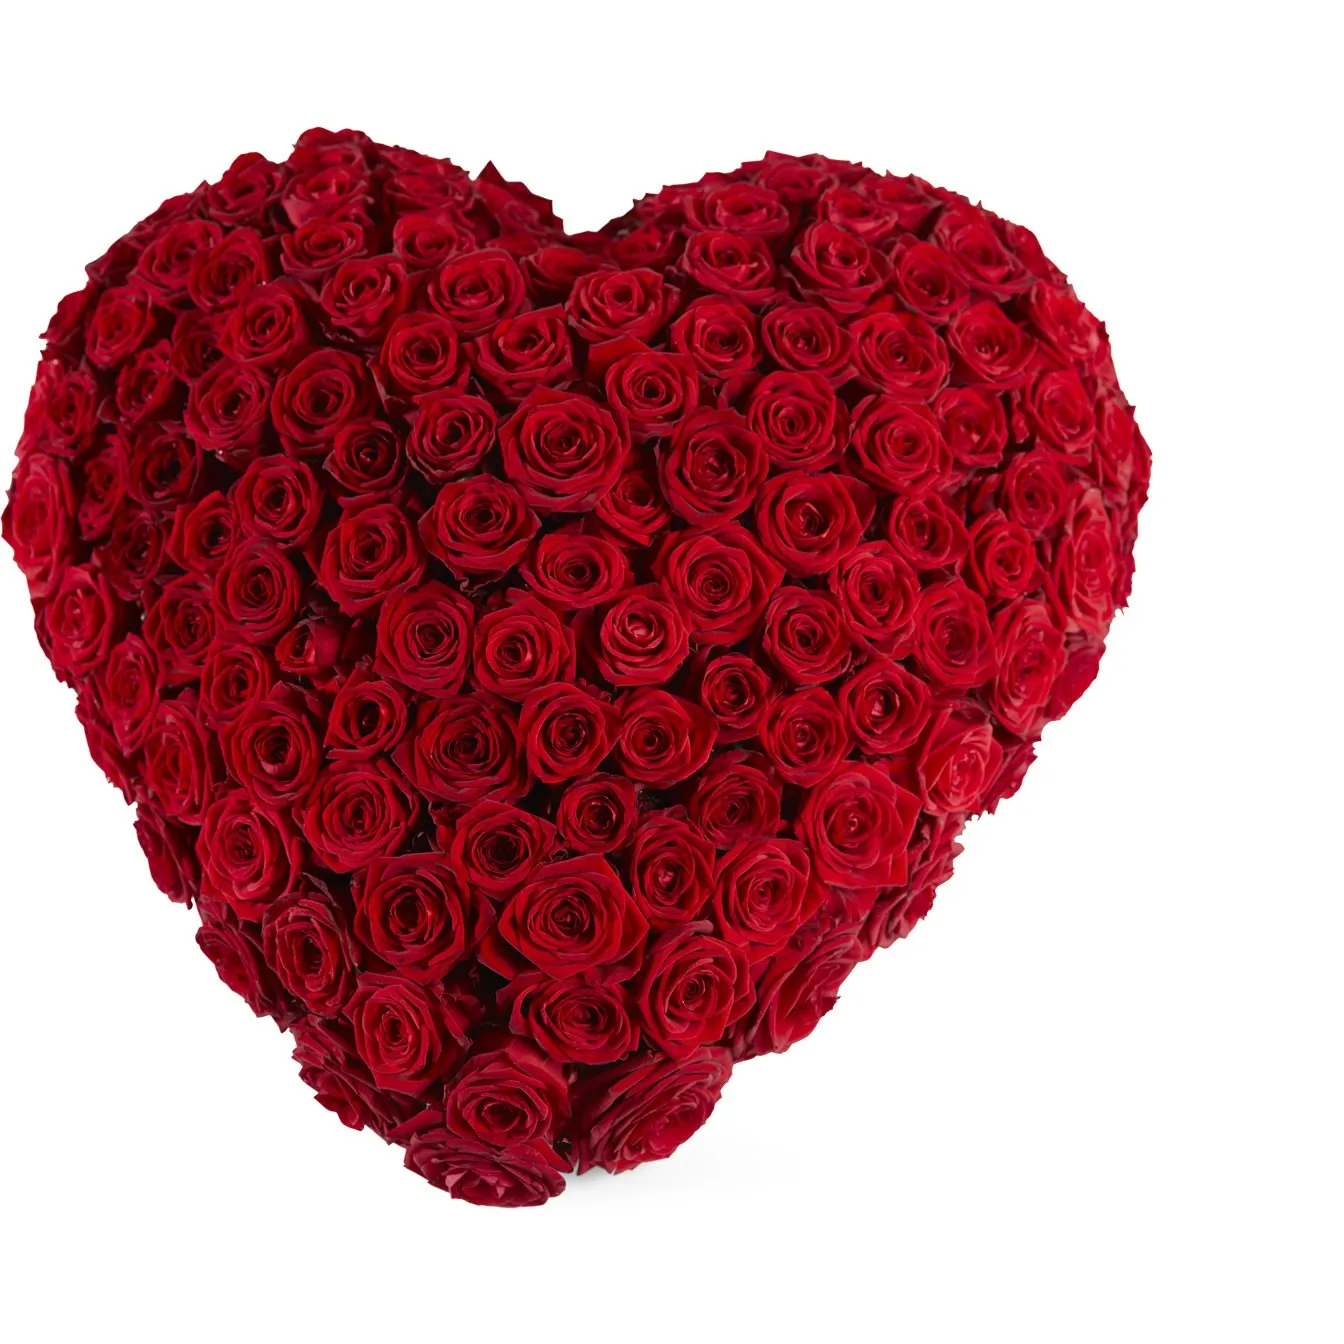 Funeral - Red roses -heart shape - Dearest